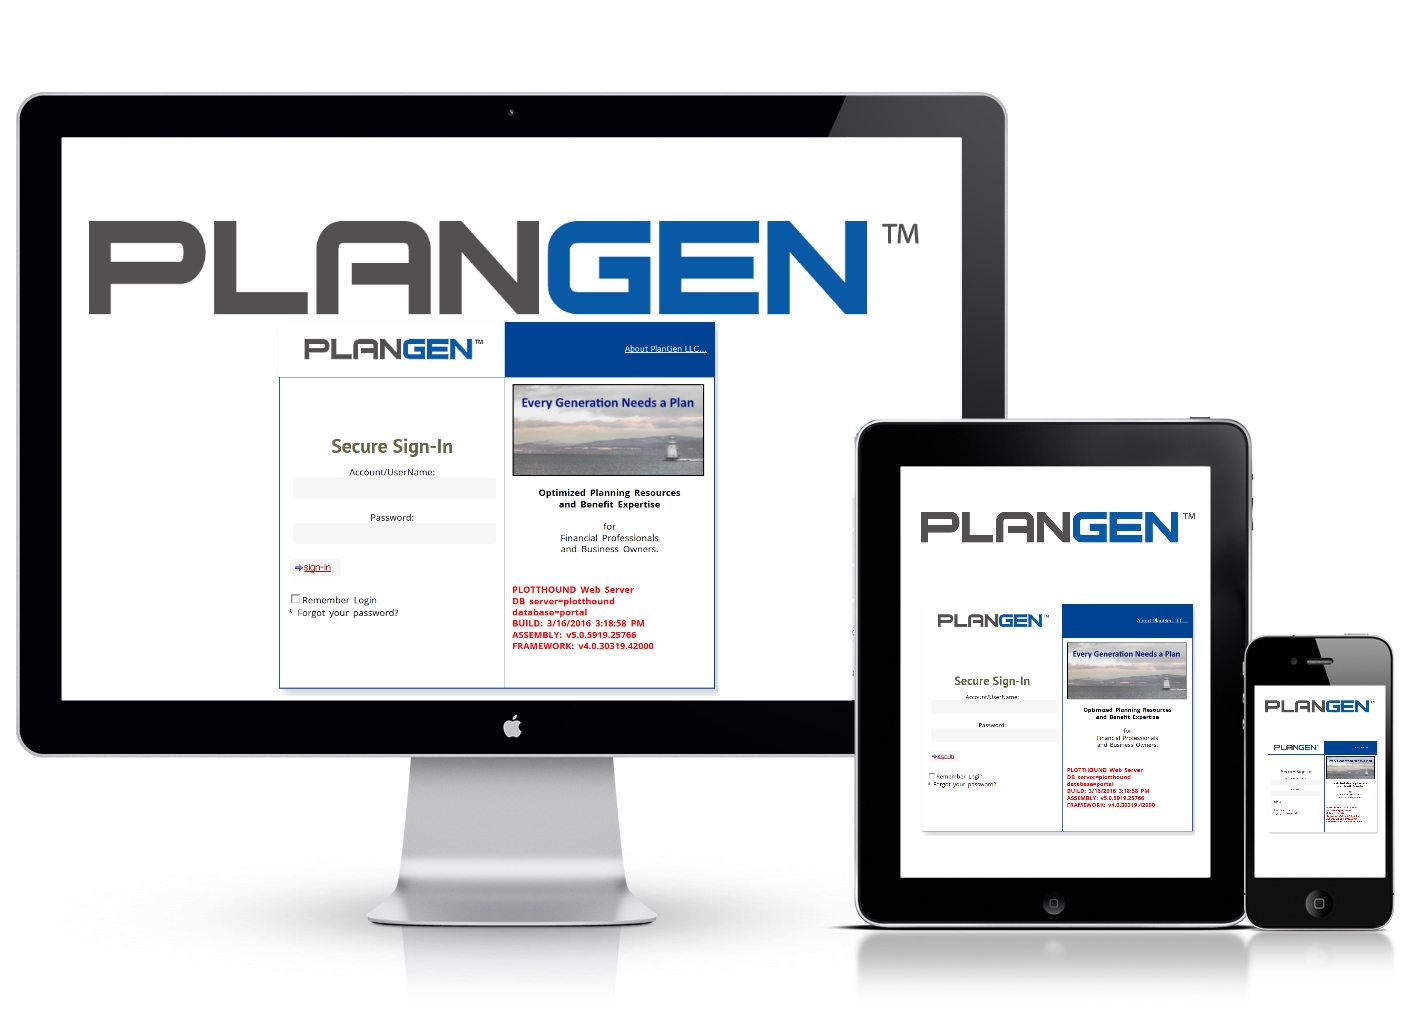 PlanGen works across desktop and mobile devices.